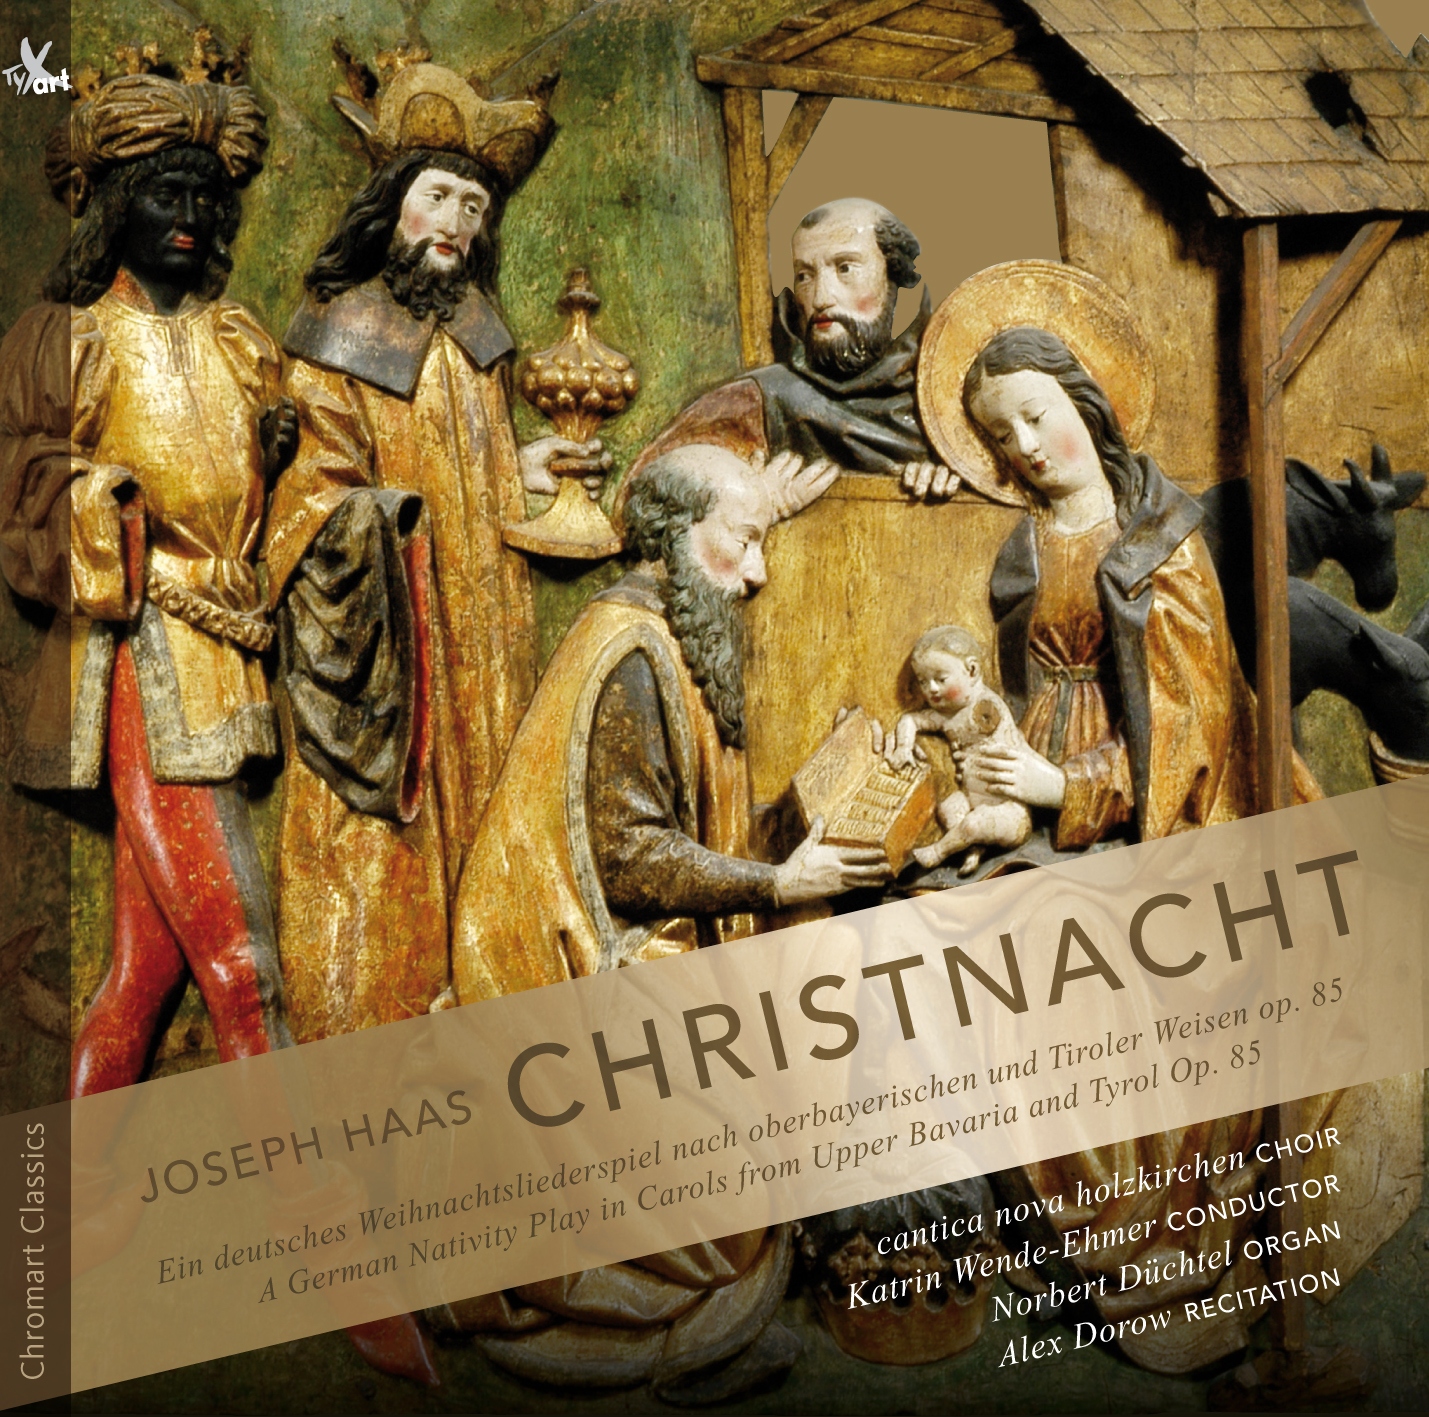 Joseph Haas: Christnacht (Christmas Eve) Op. 85